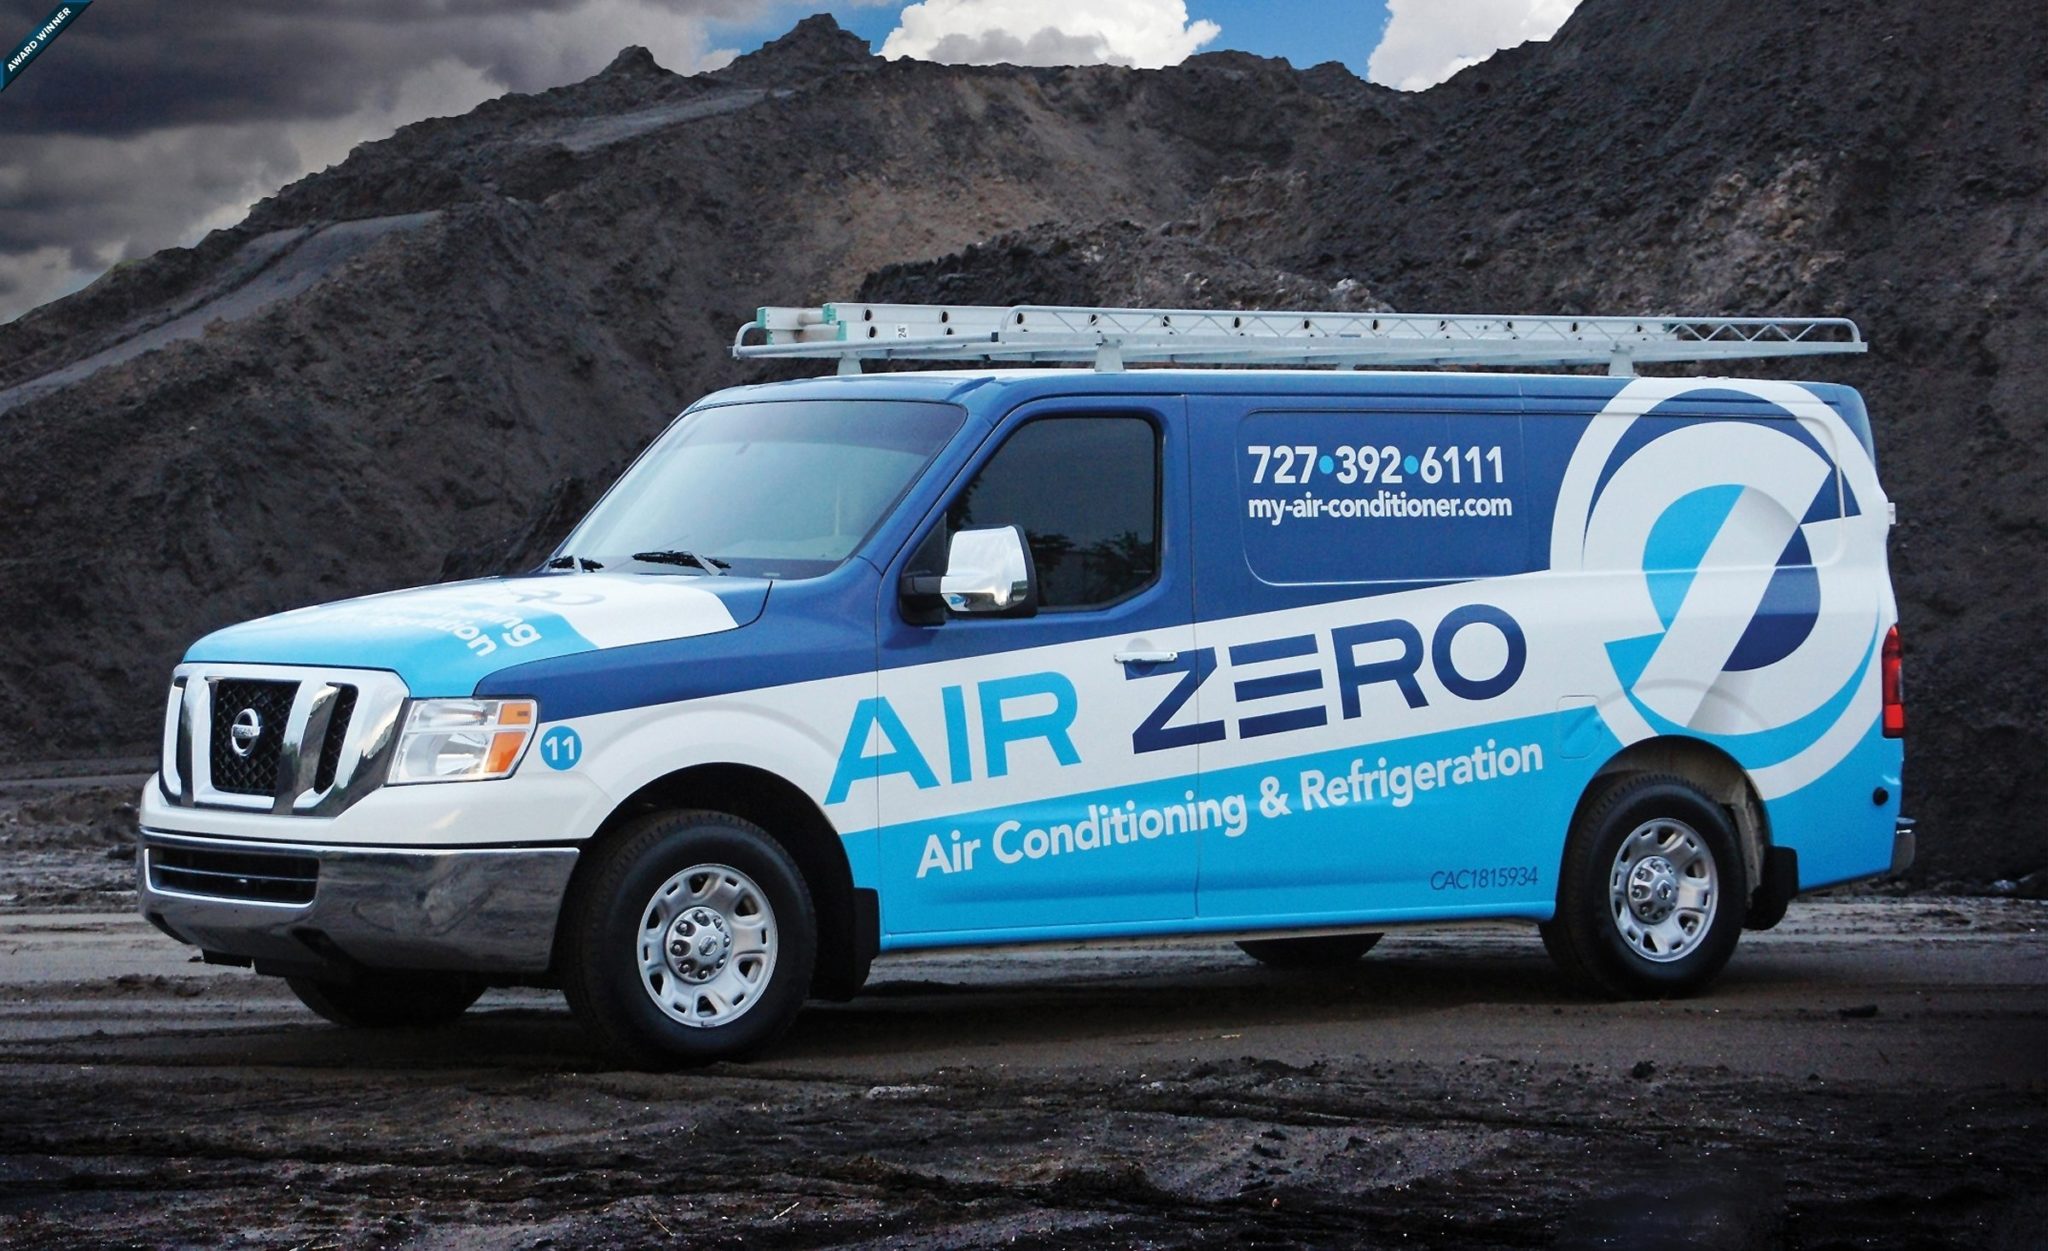 air zero air conditioning & refrigeration